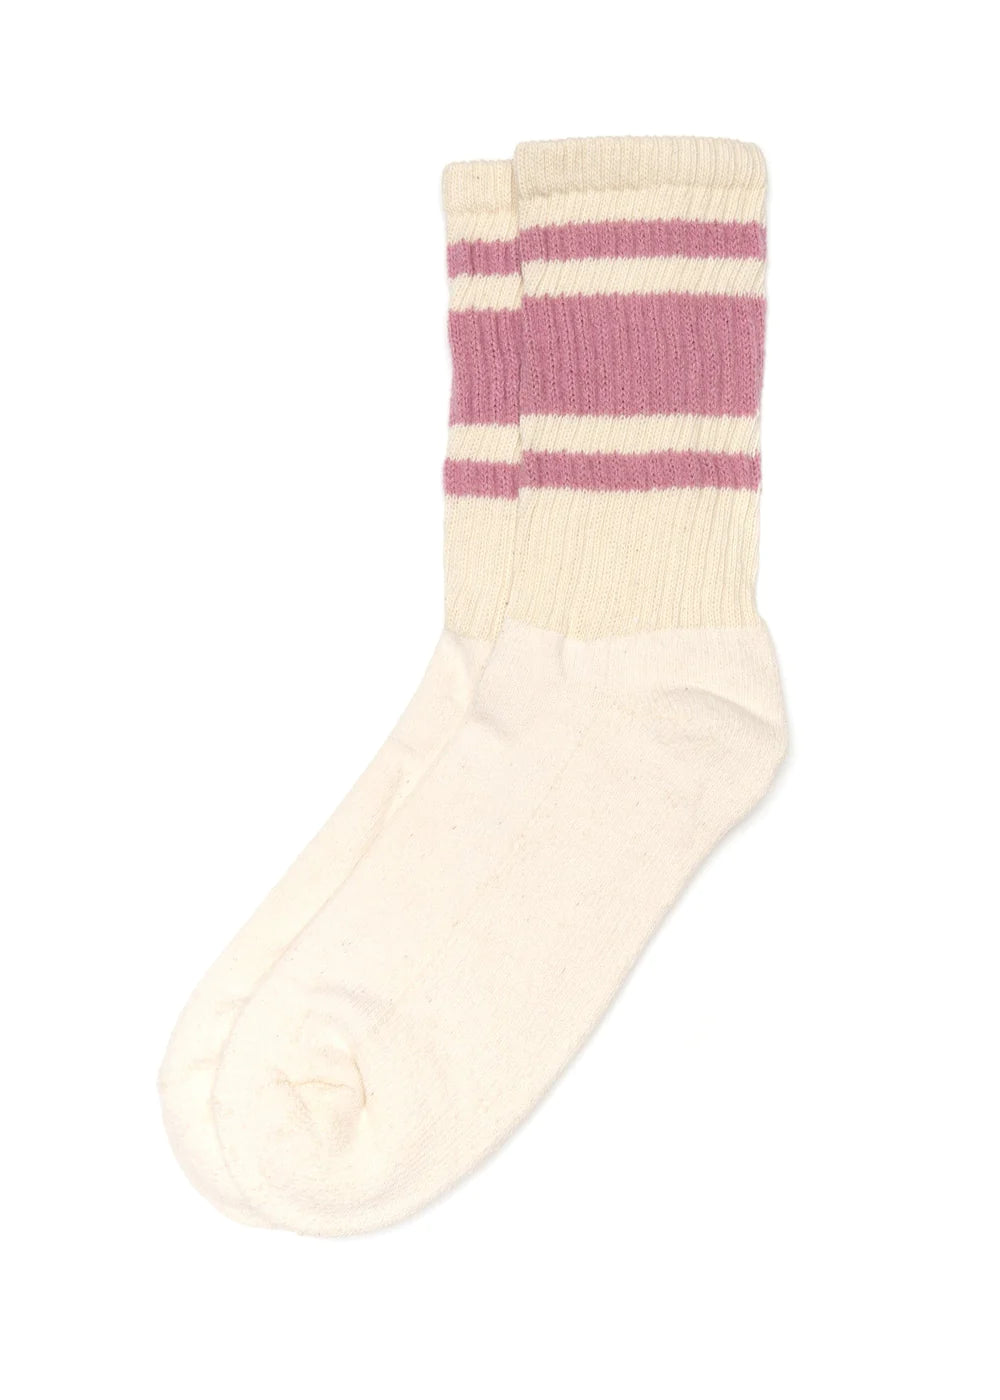 American trench - the mono stripe sock  -  dusty rose